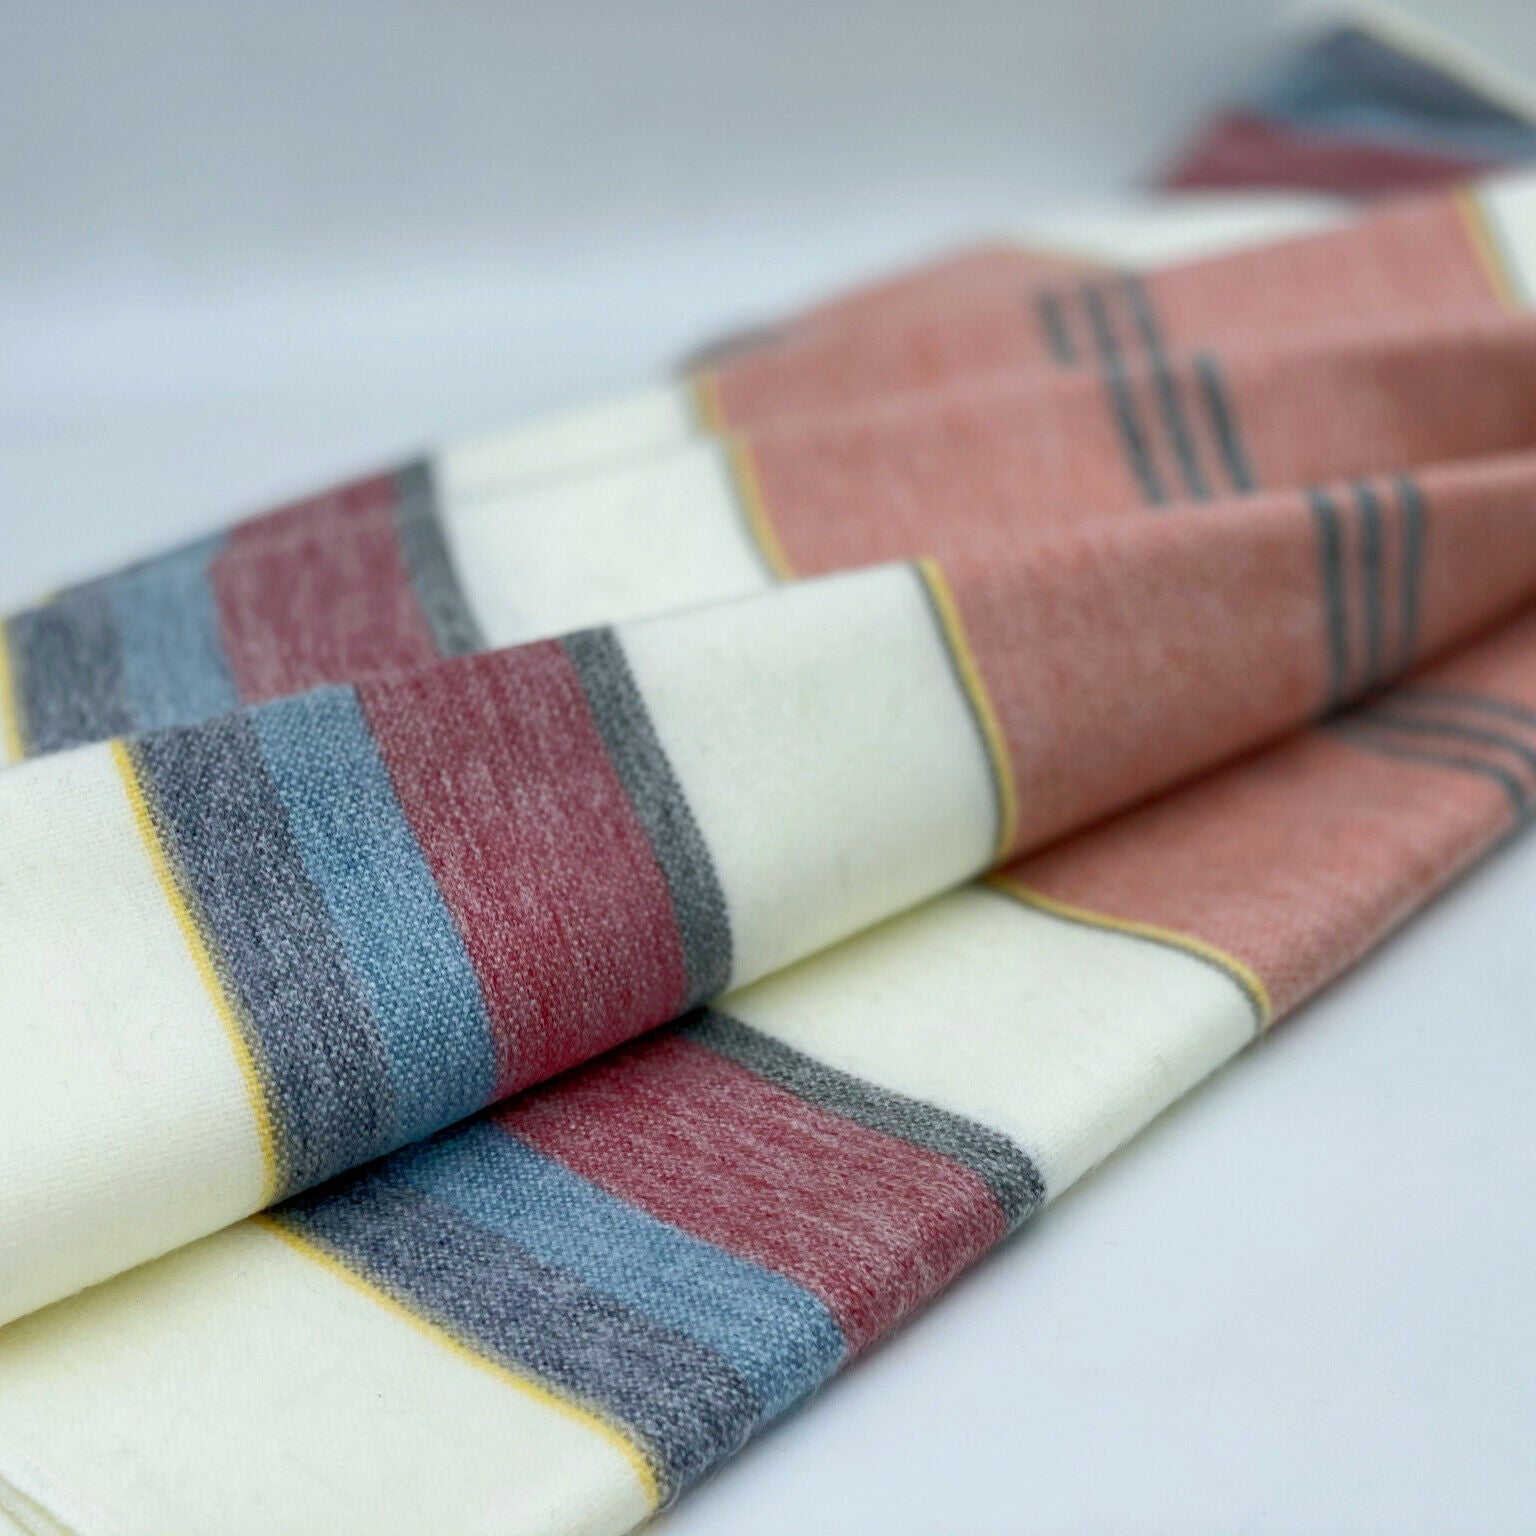 Rucu - Baby Alpaca Wool Throw Blanket / Sofa Cover - Queen 95" x 63" - multi colored stripes pattern